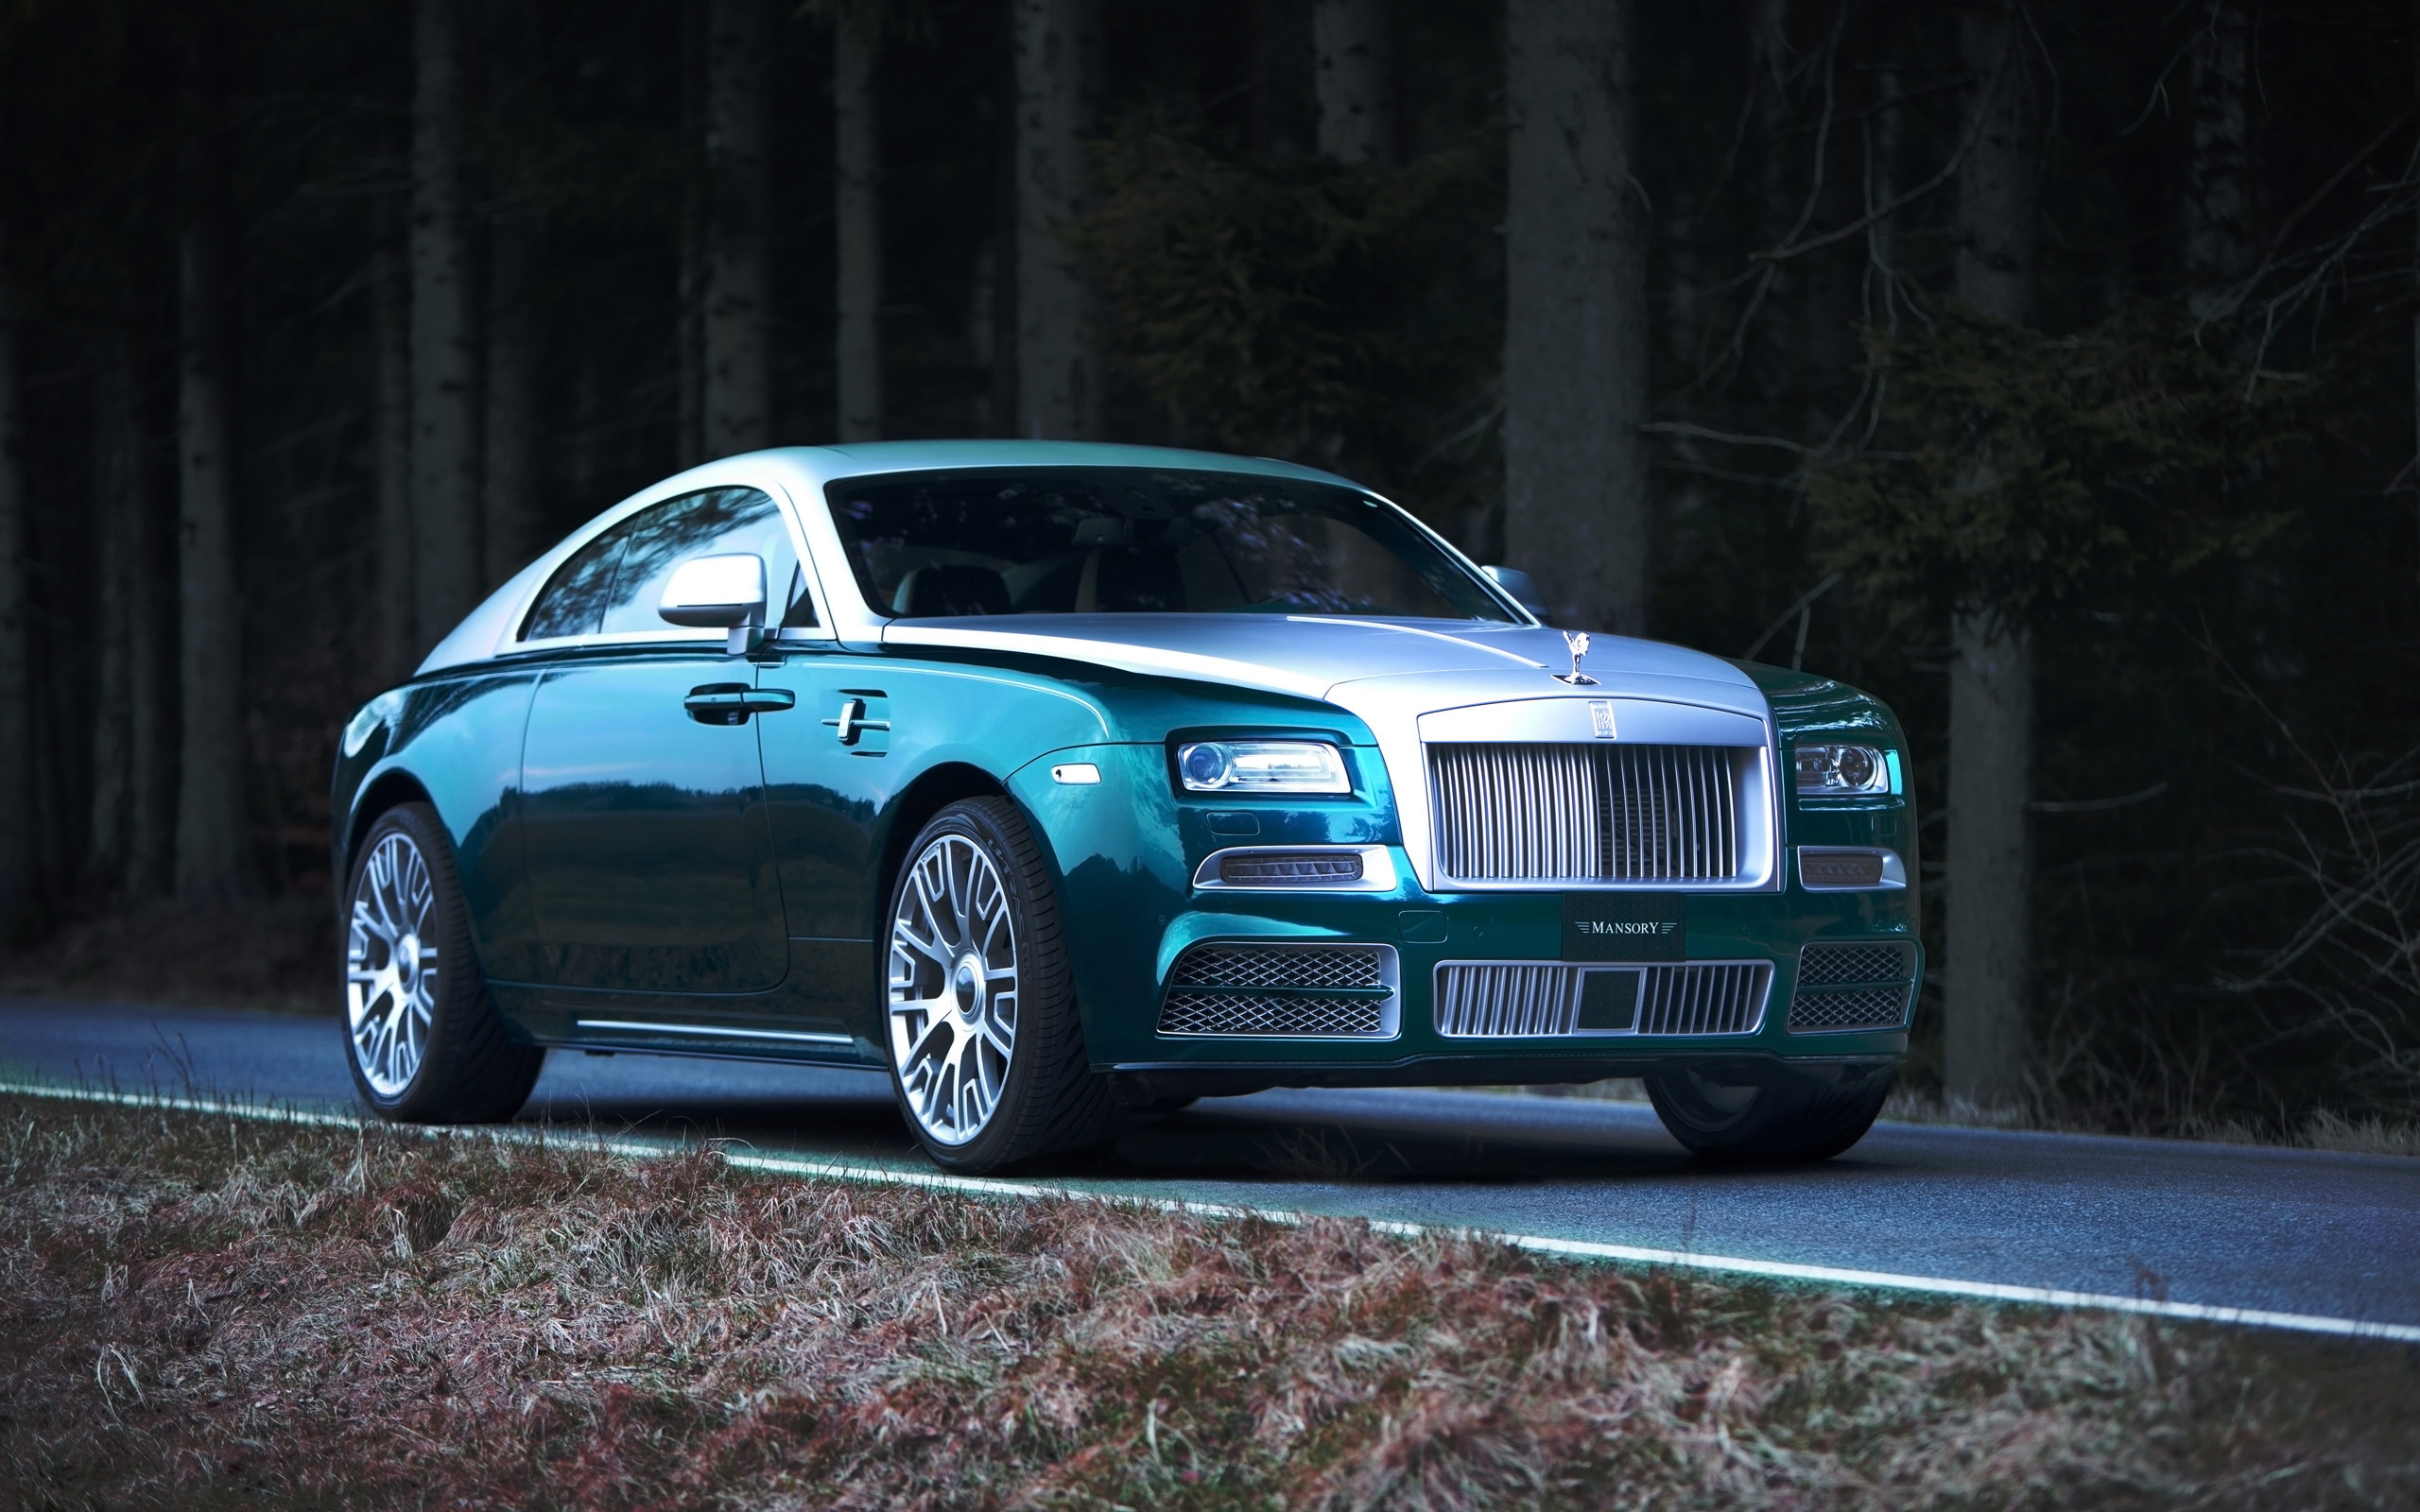 2014 Mansory Rolls Royce Wraith Wallpaper | HD Car Wallpapers | ID #4302